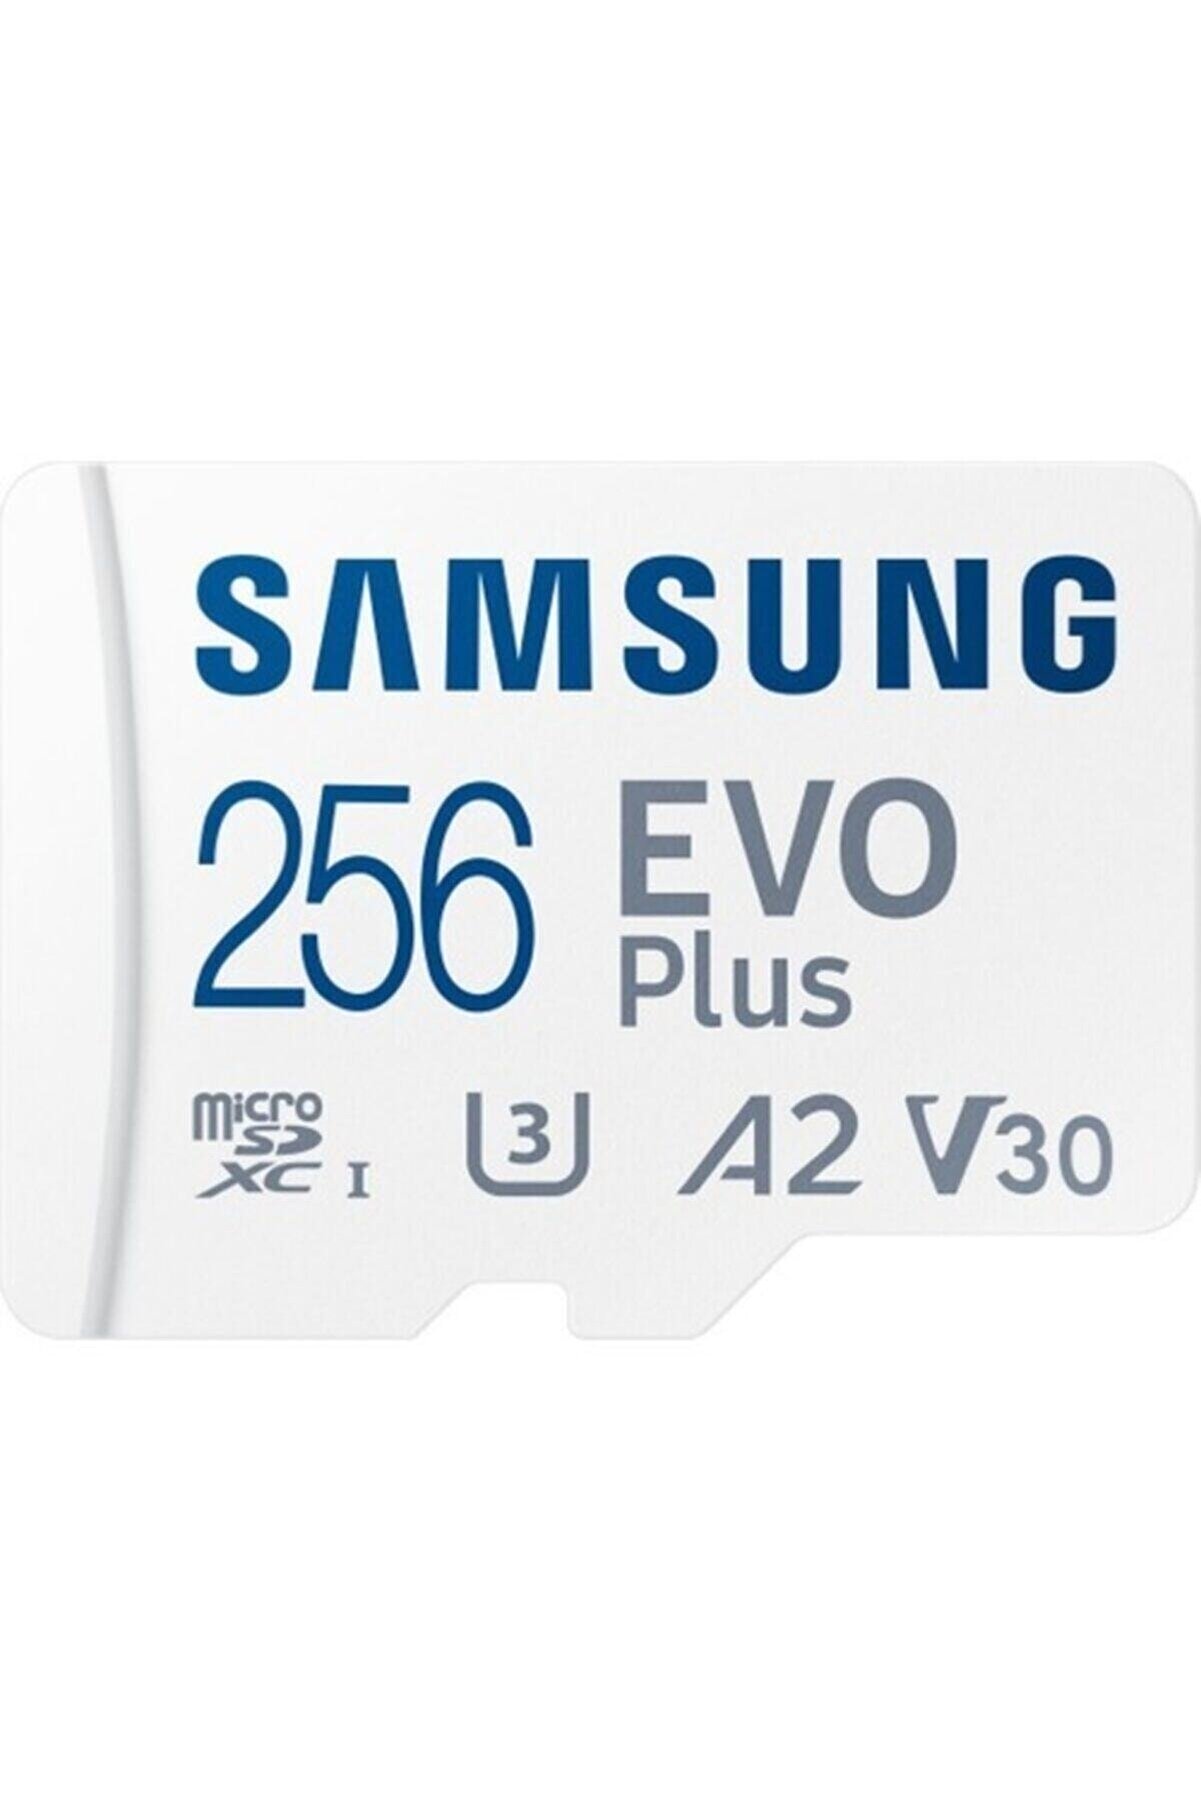 Samsung 256GB Evo Plus MicroSDXC UHS-I U3 V30 A2 130MB/S 4K MB-MC256KA/TR Hafıza Kartı